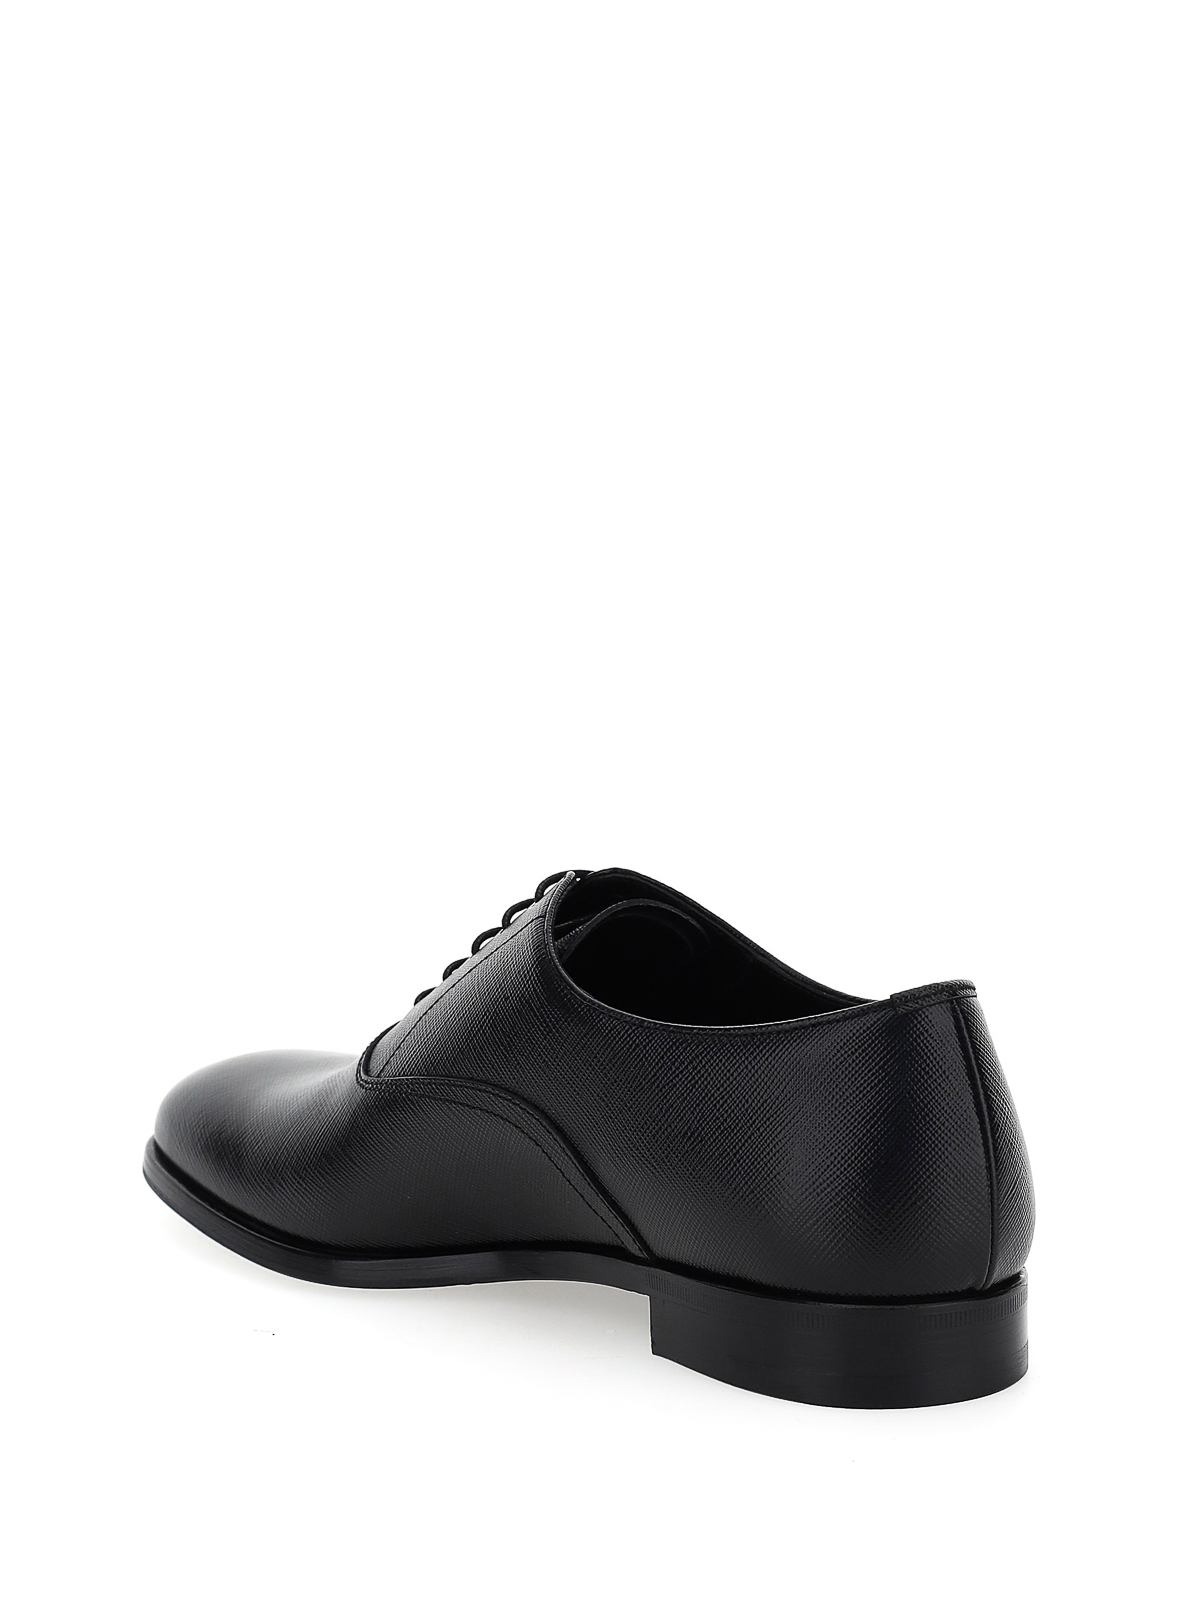 saffiano leather oxford dress shoe